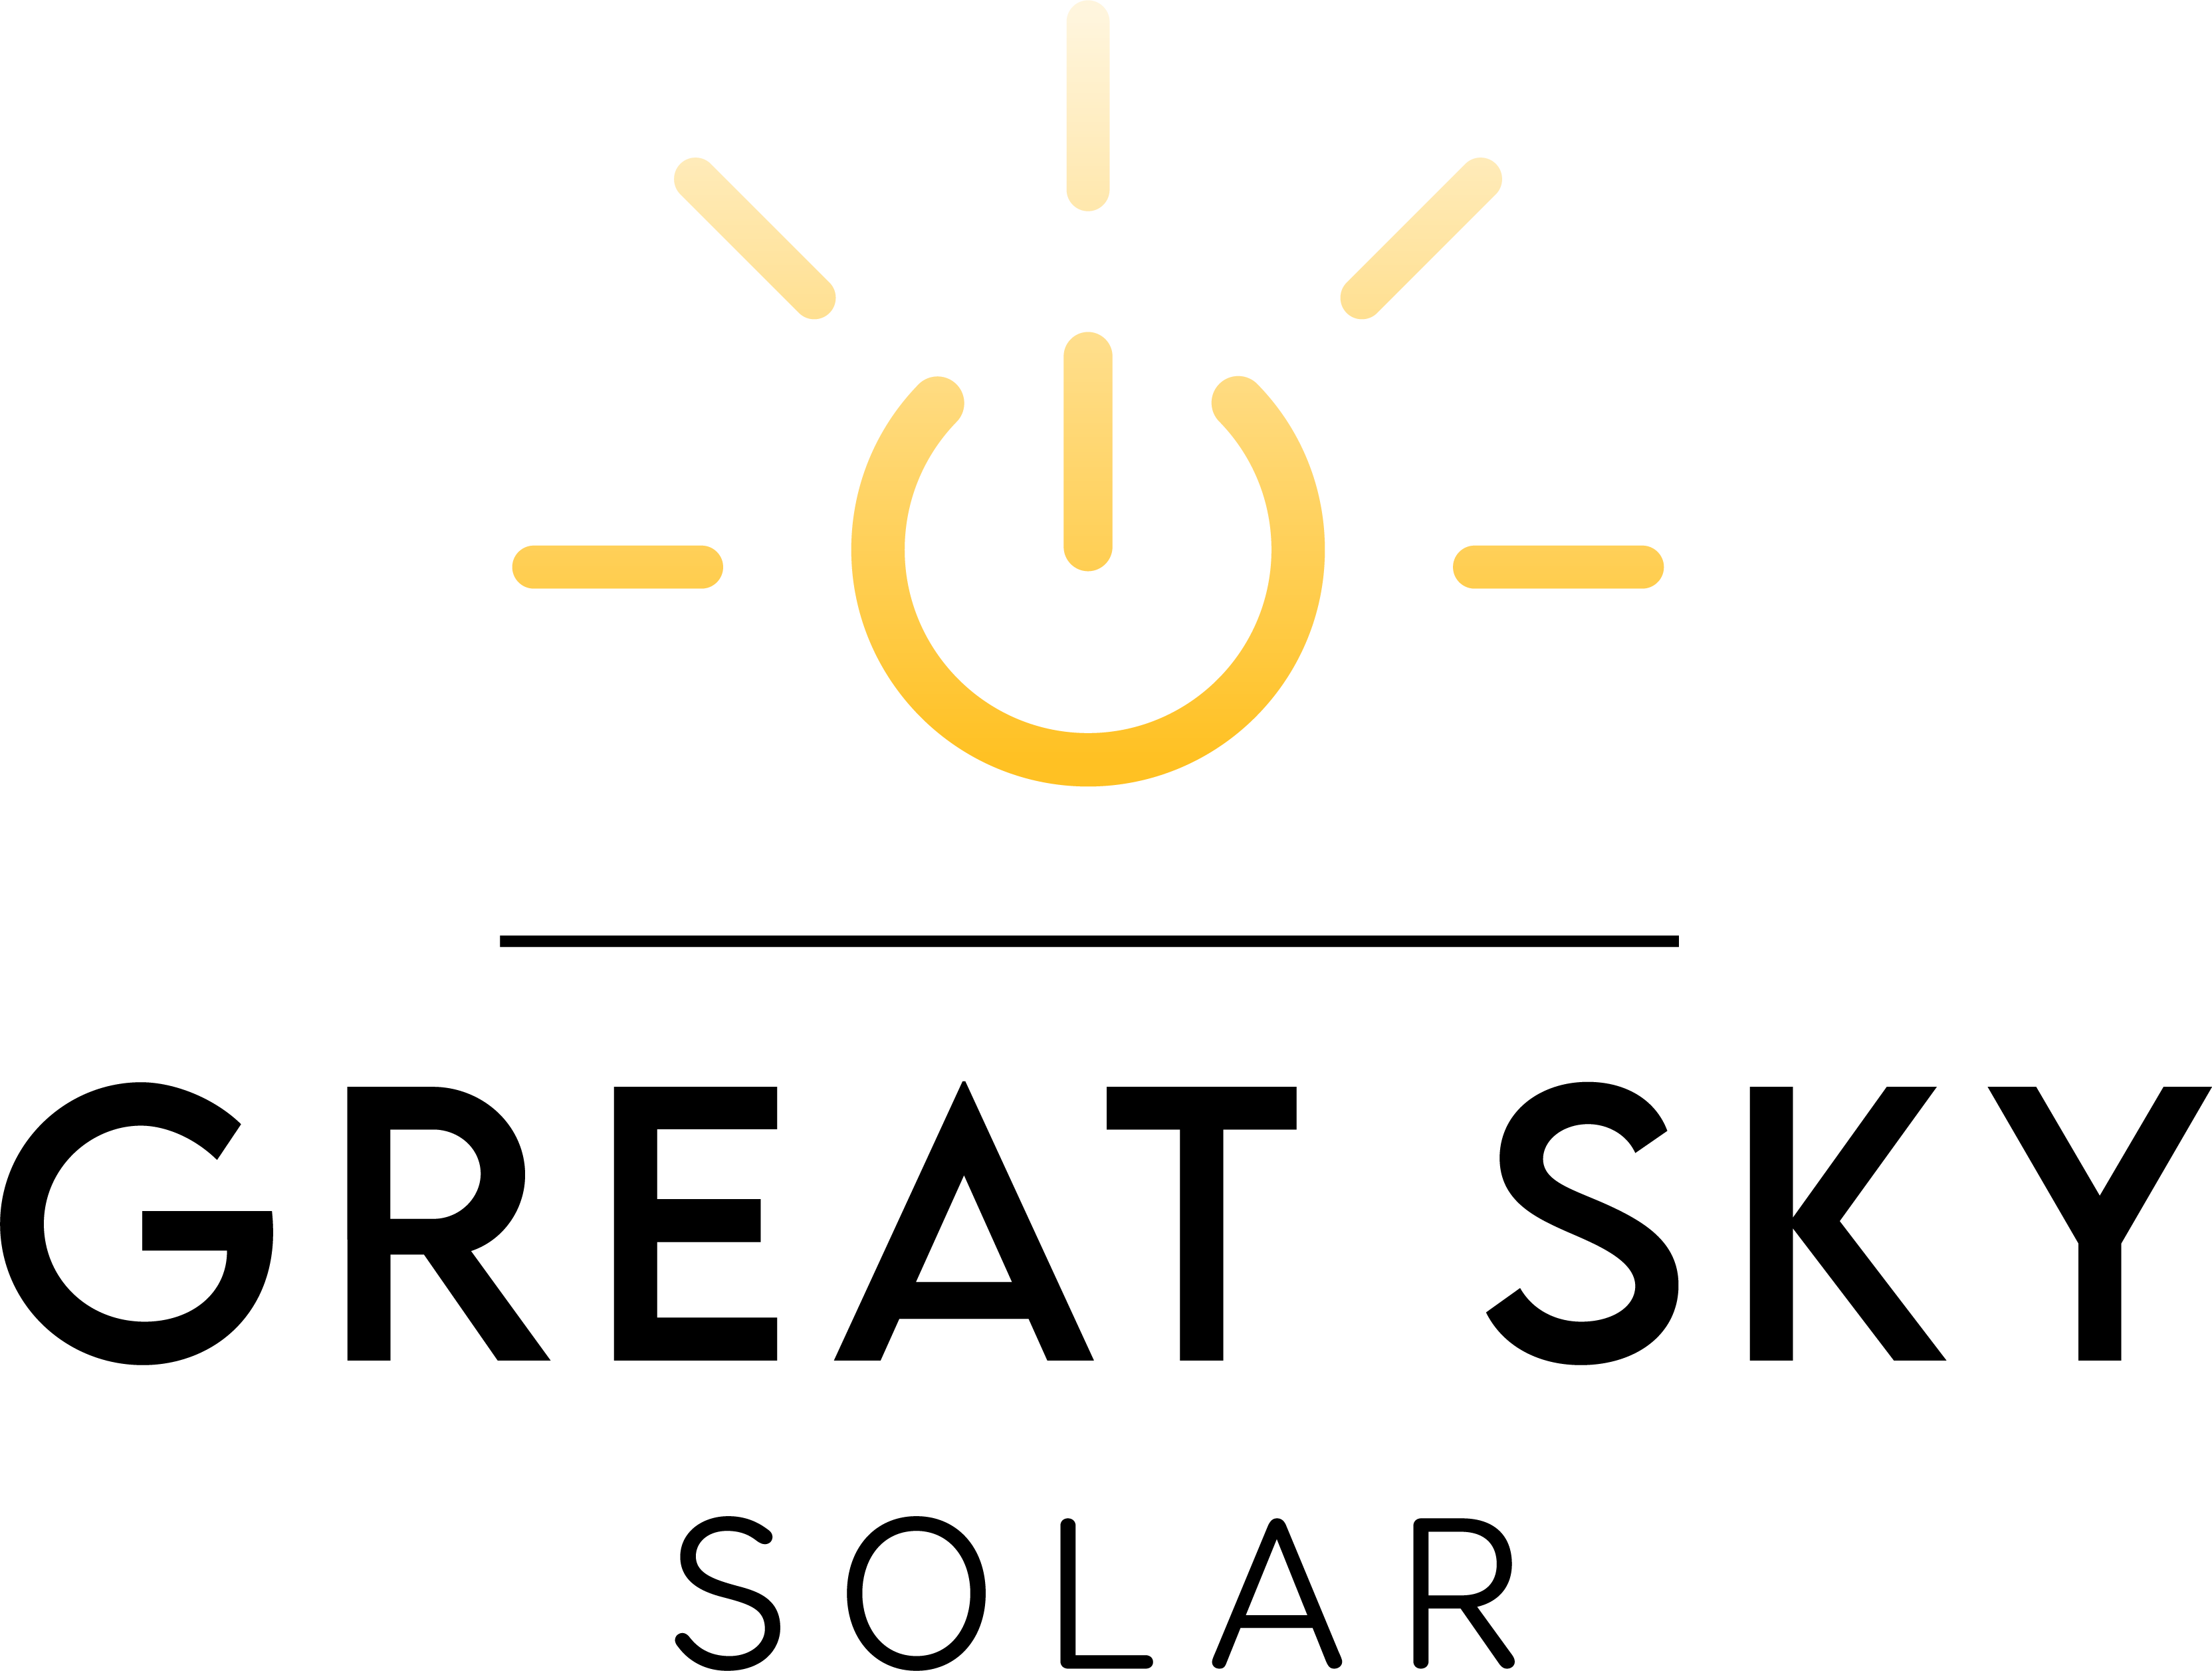 Great Sky Solar logo